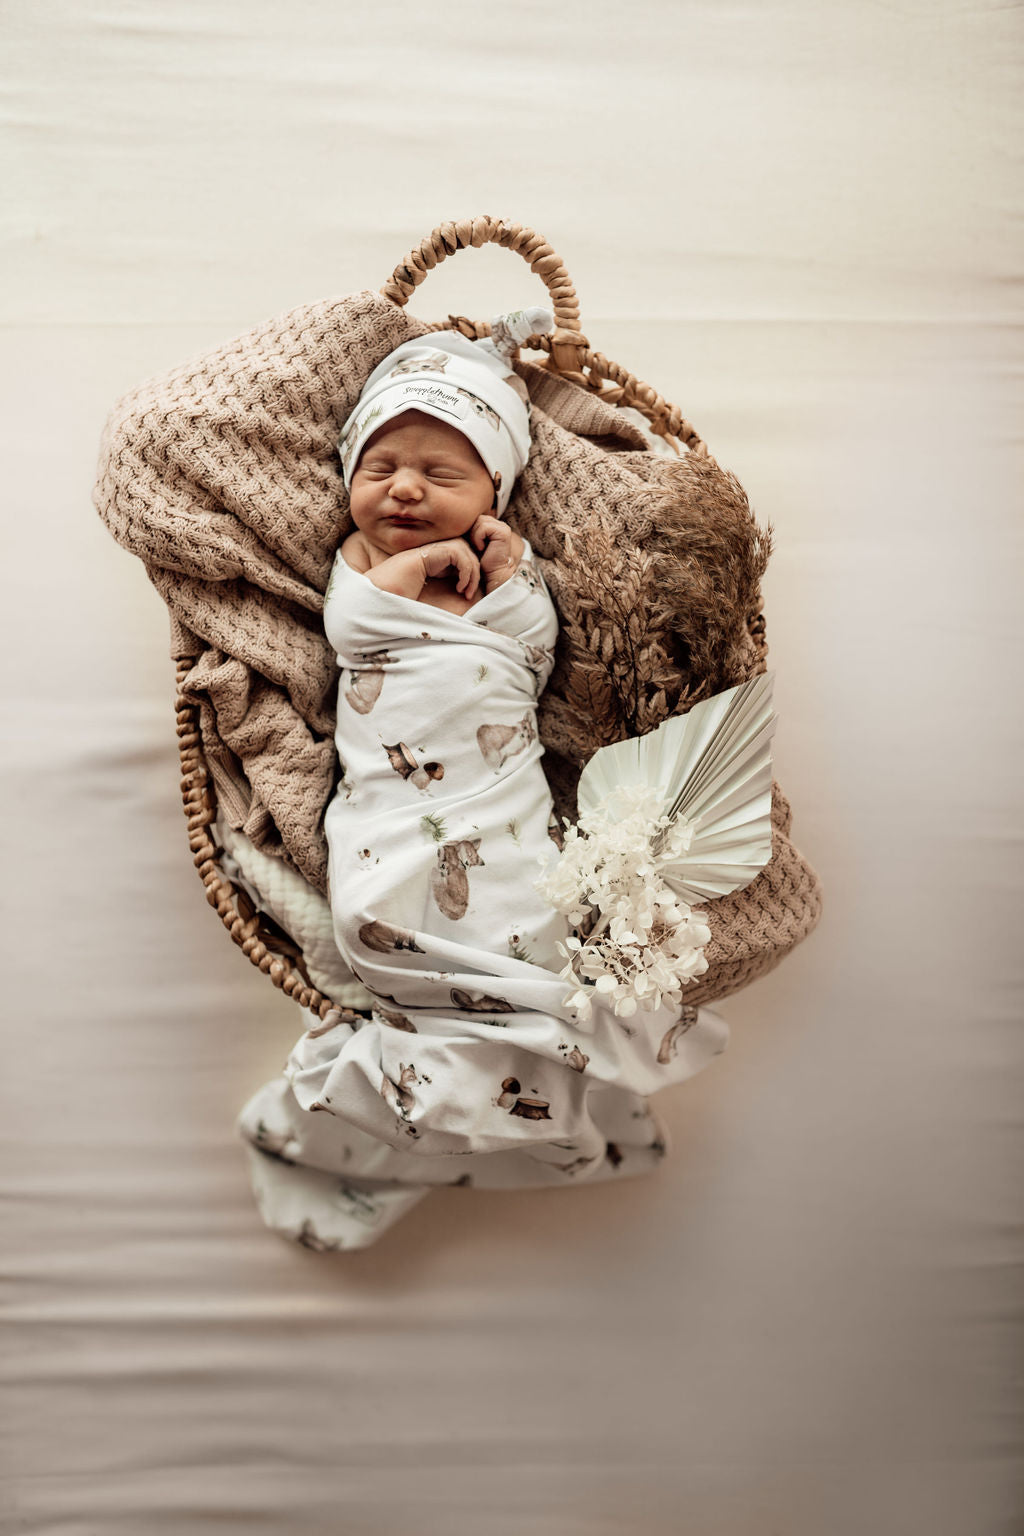 Snuggle Hunny Diamond Knit Baby Blanket - Hazelnut